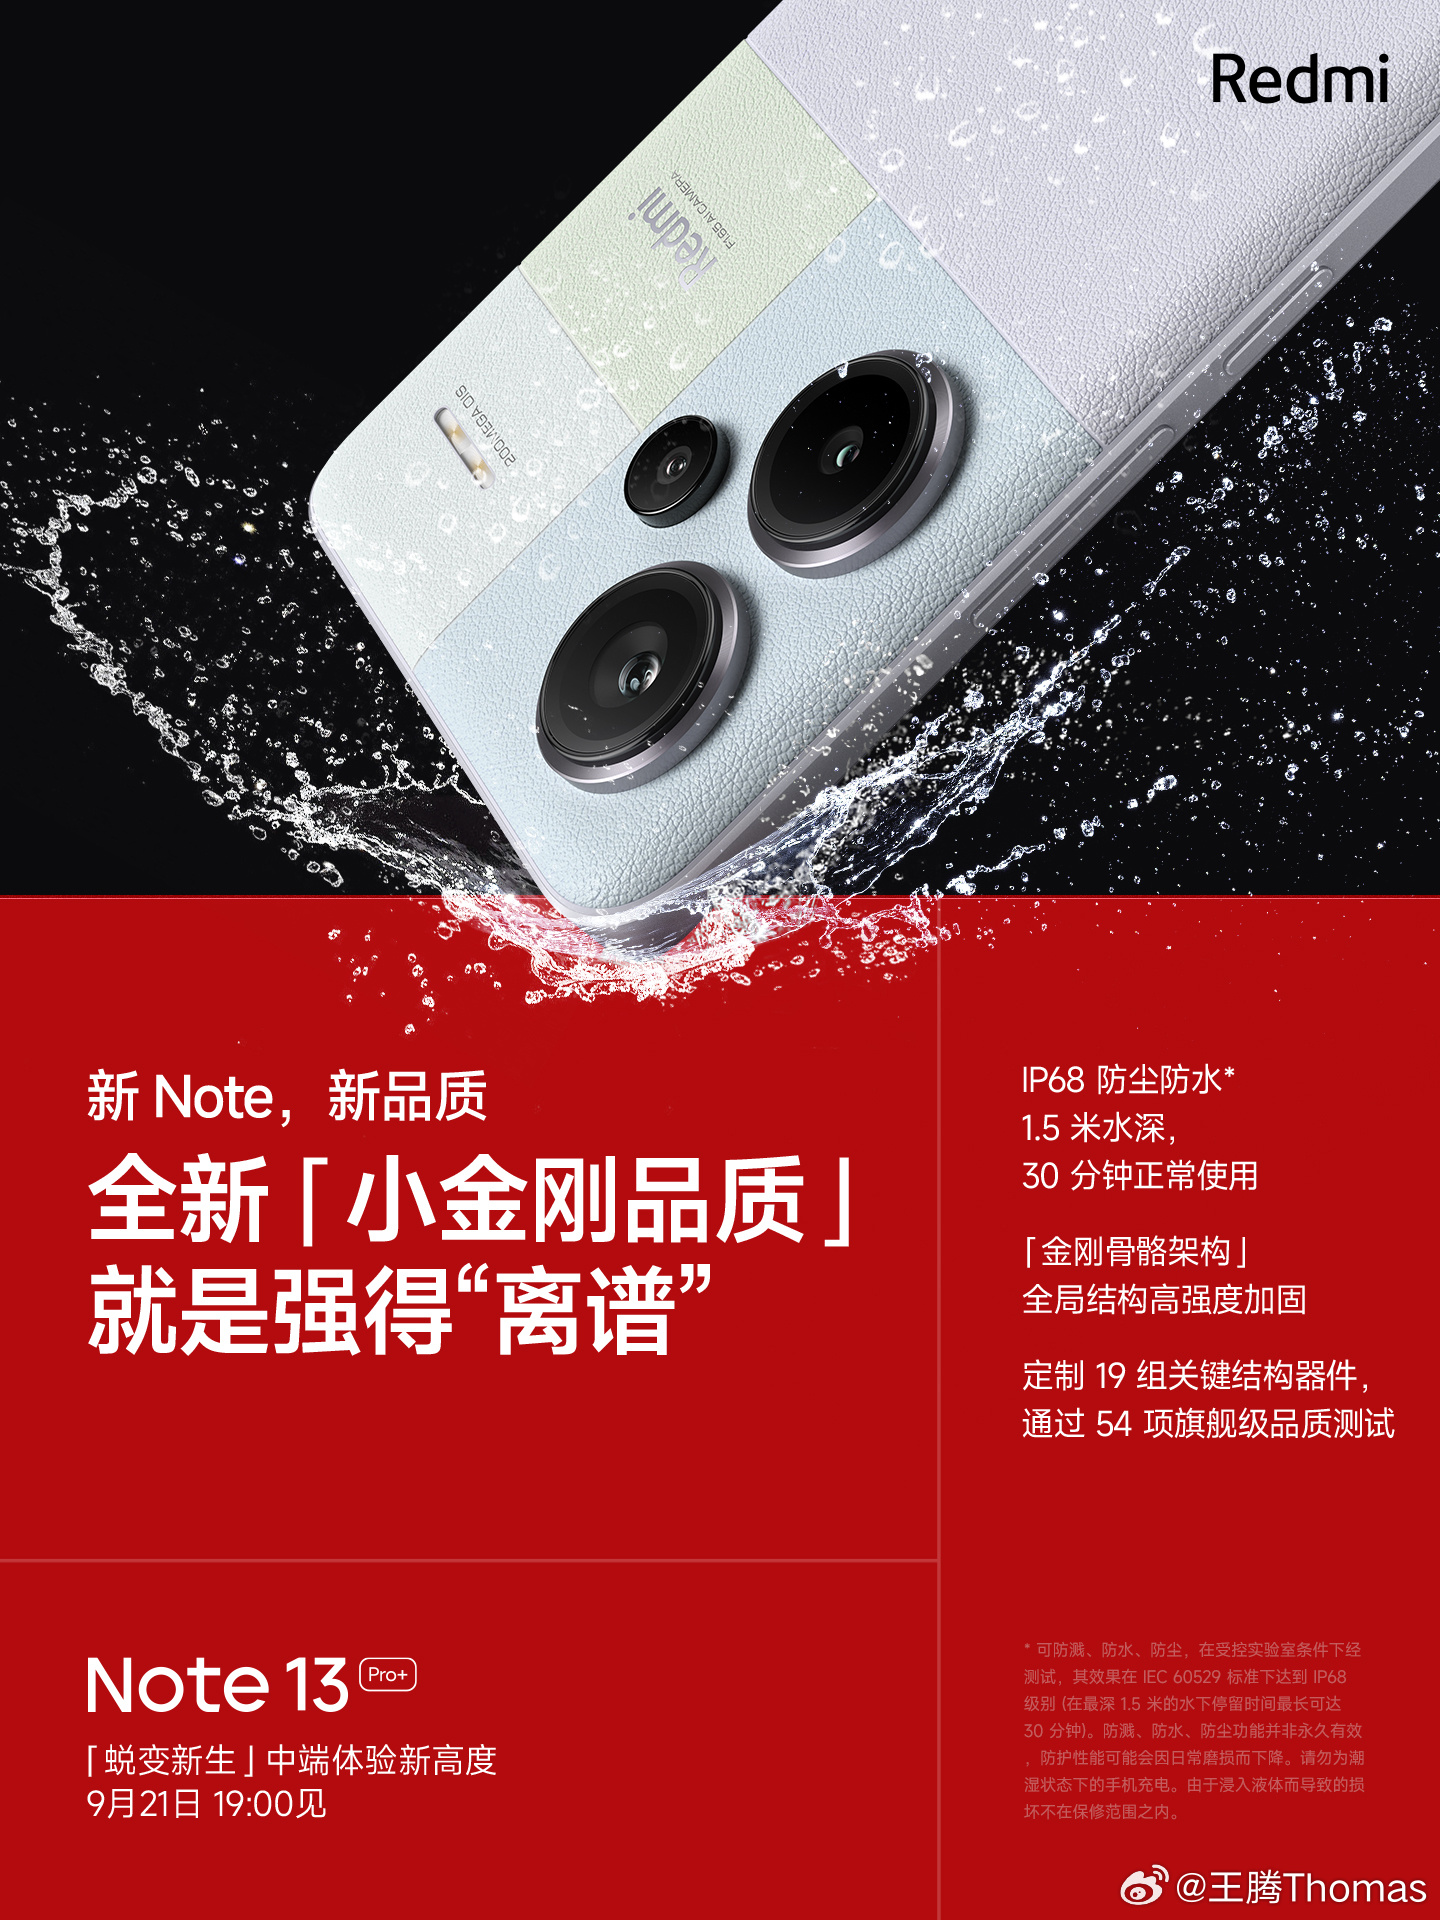 Xiaomi's Redmi Note 13 Pro Plus will democratize IP68 rating